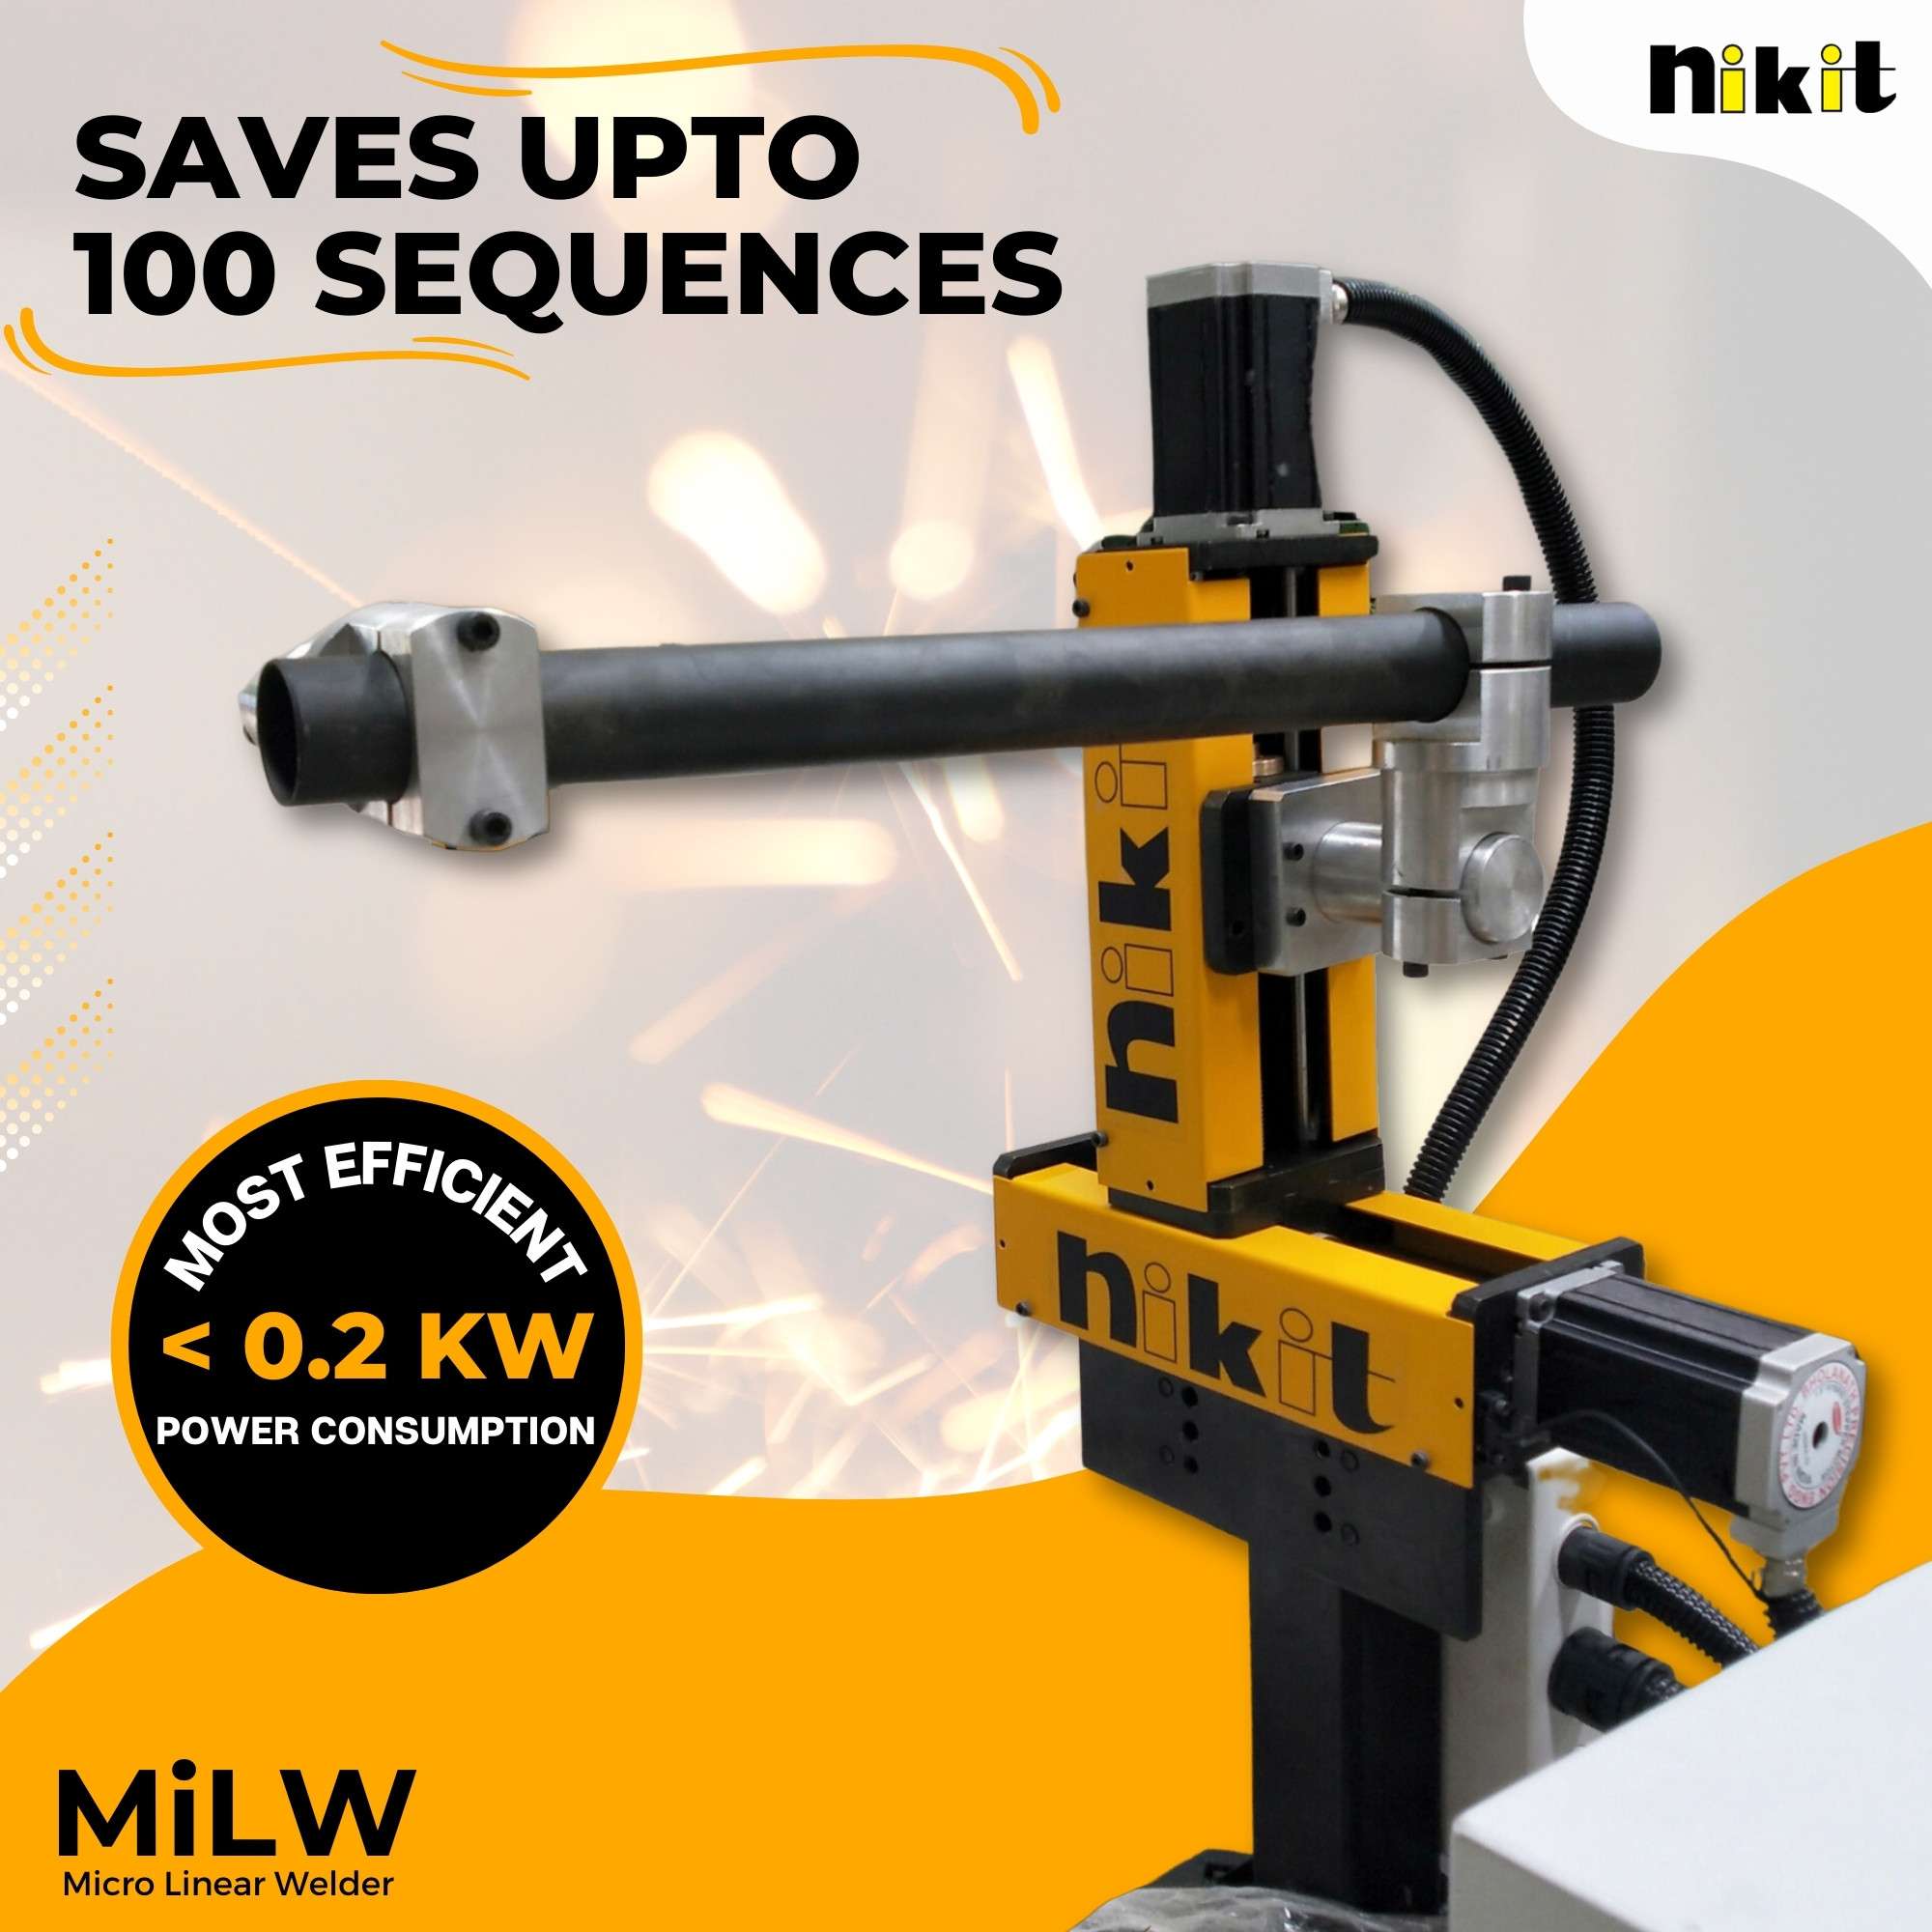 nikti-engineers-welding-automation-micro-linear-welder-welding-product-india-milw-power-effecient-welding-machine